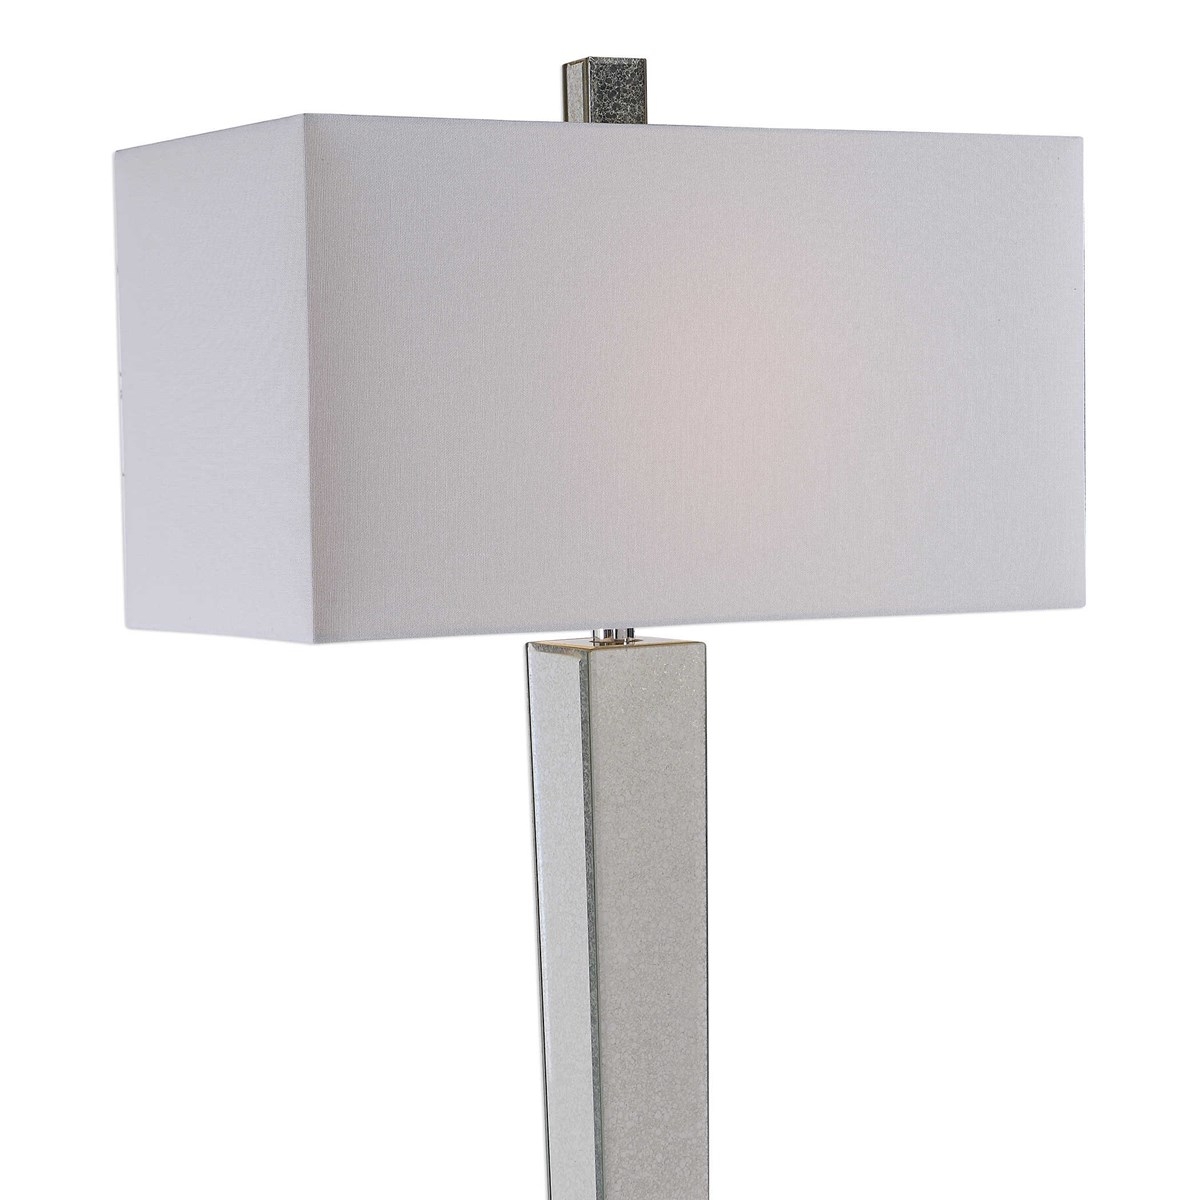 MCBRYDE FLOOR LAMP - Image 1